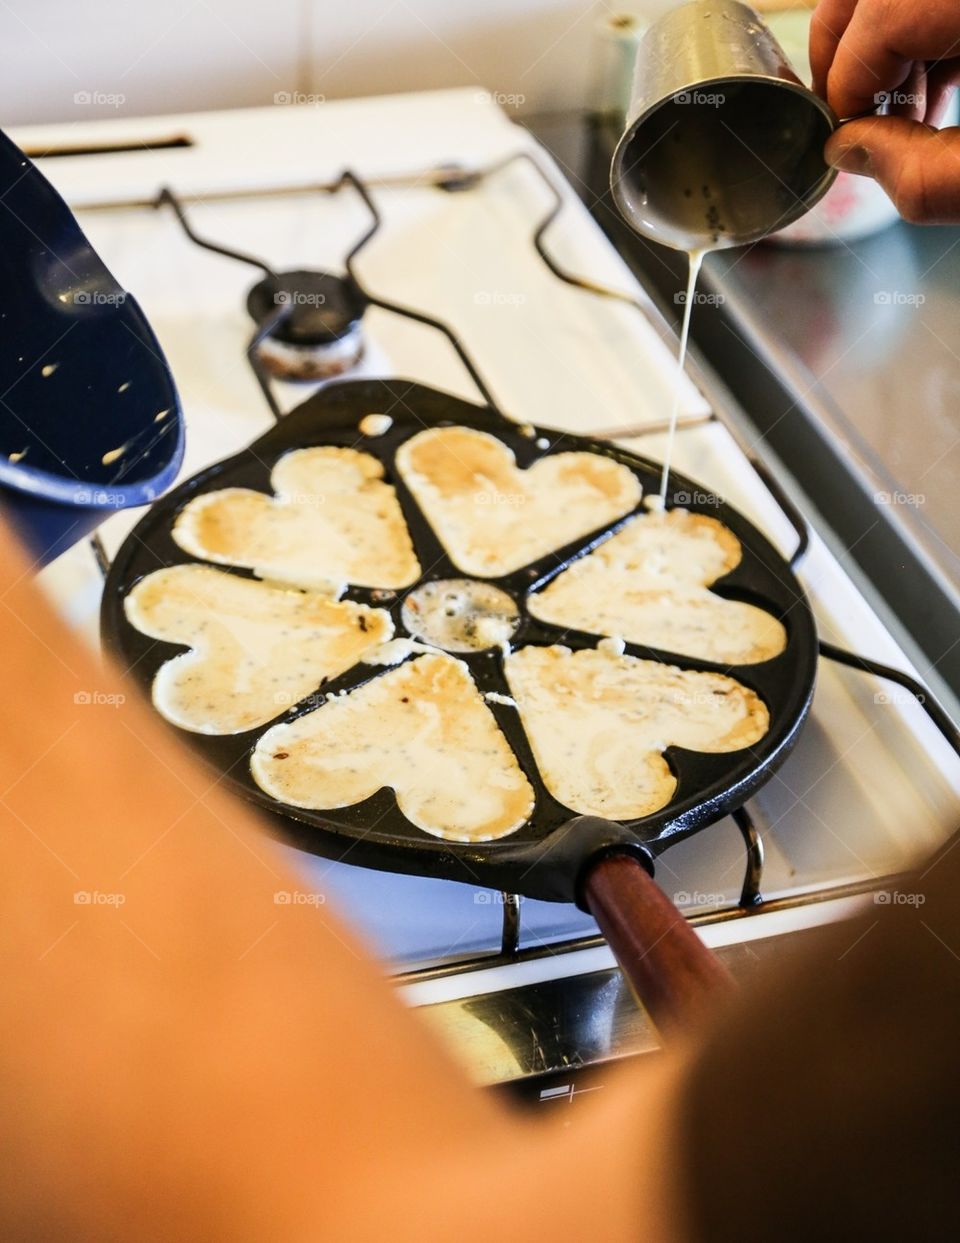 Making heartshaped pancakes 